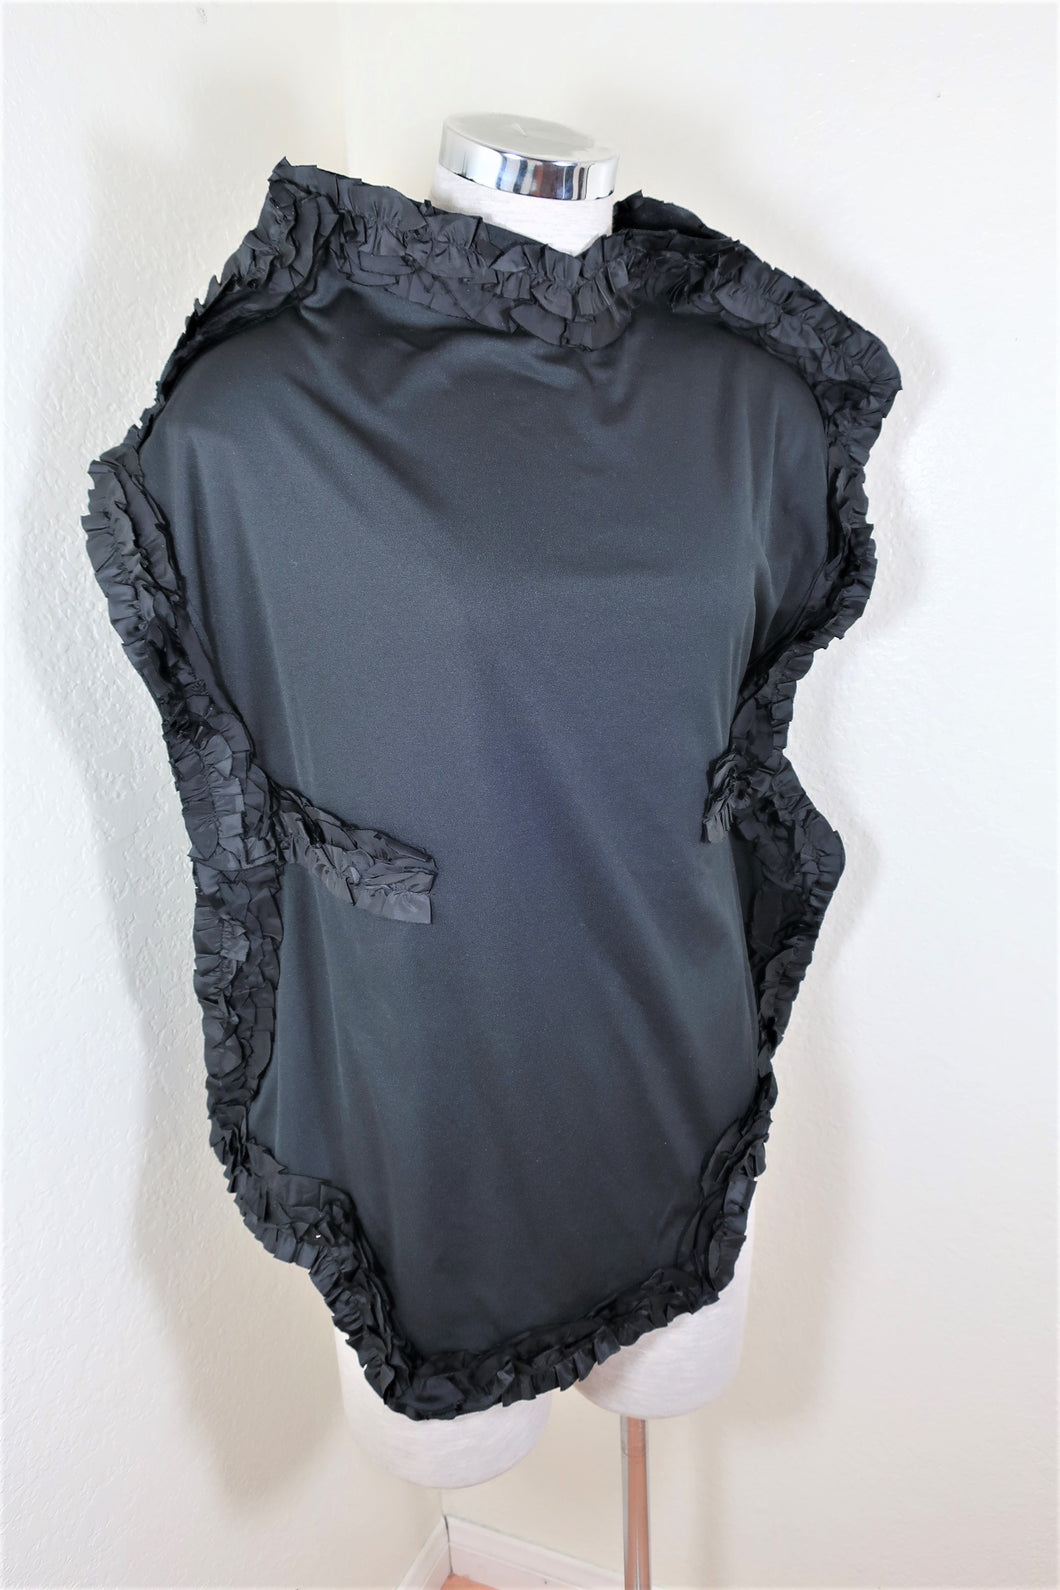 COMME DES GARCONS Black Japan Sleeveless Top Blouse Shirt Small 2 3 4